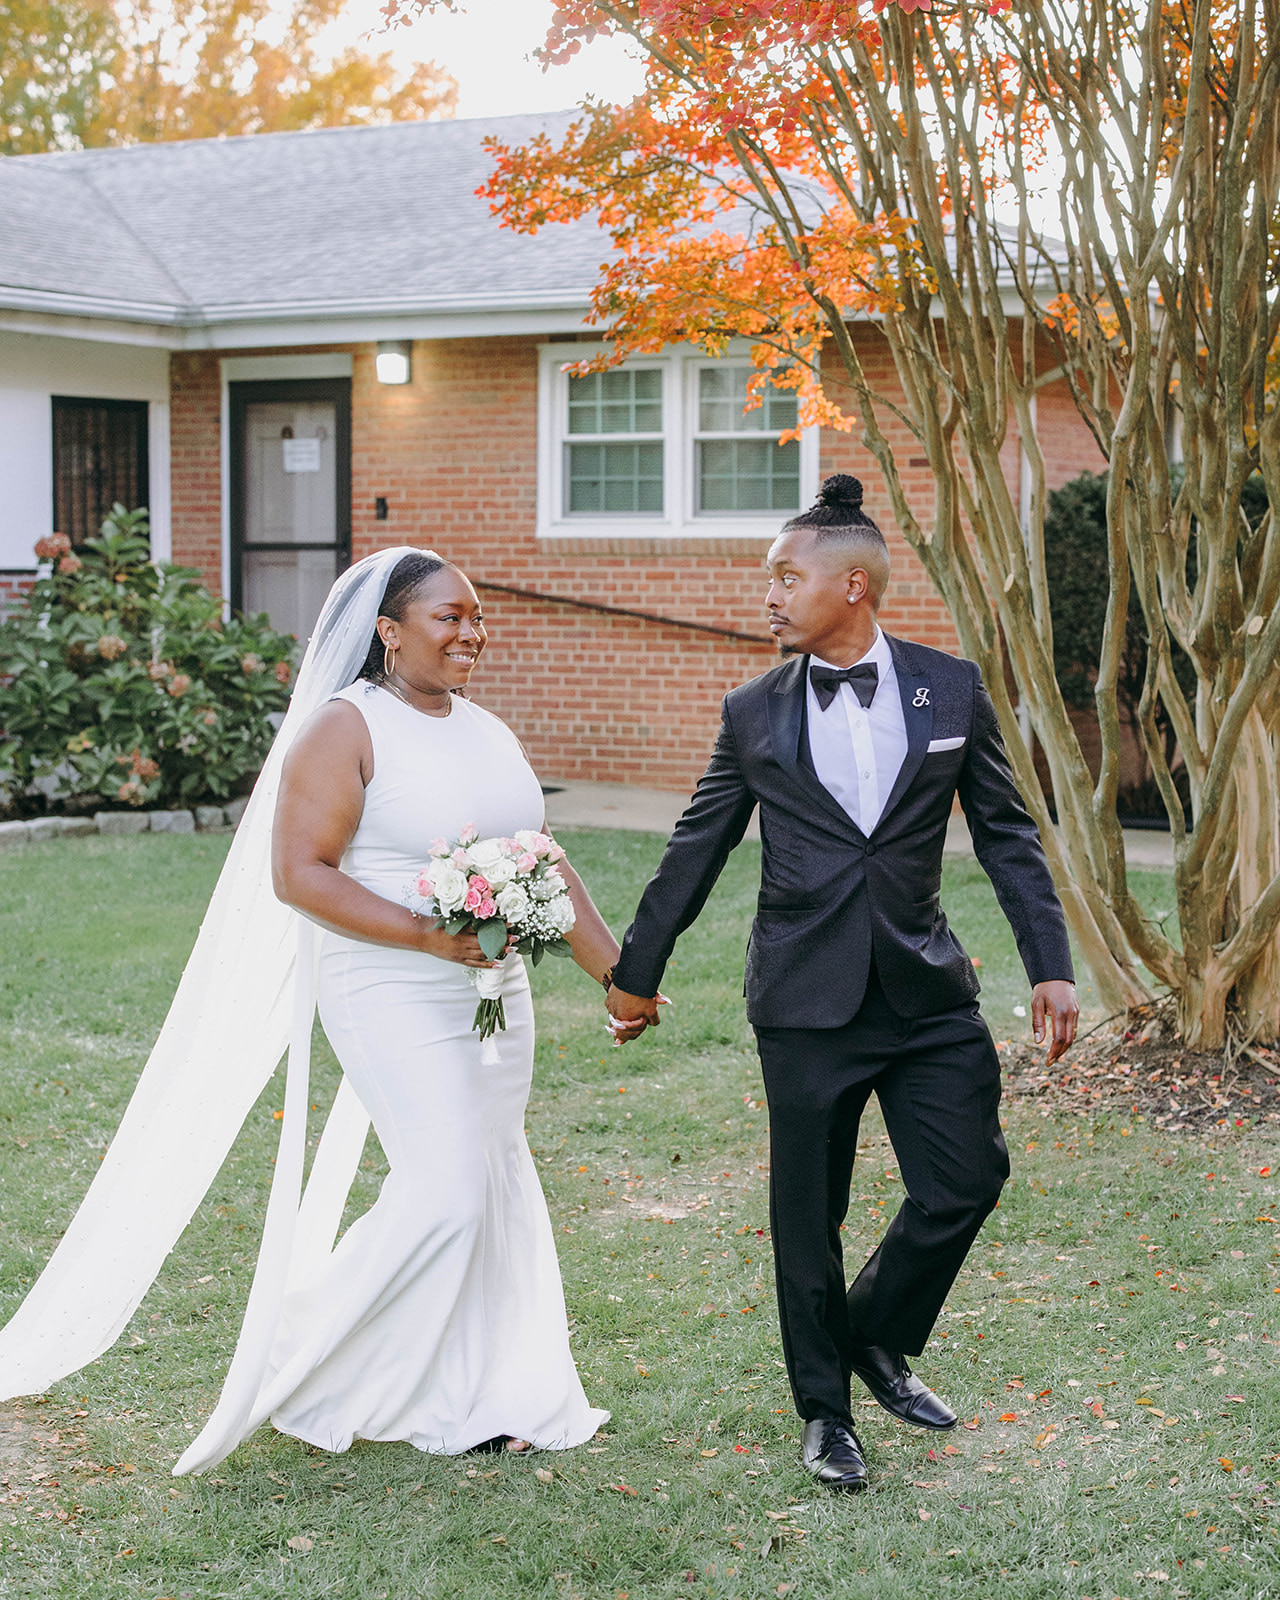 Maryland church wedding bride and groom walking together